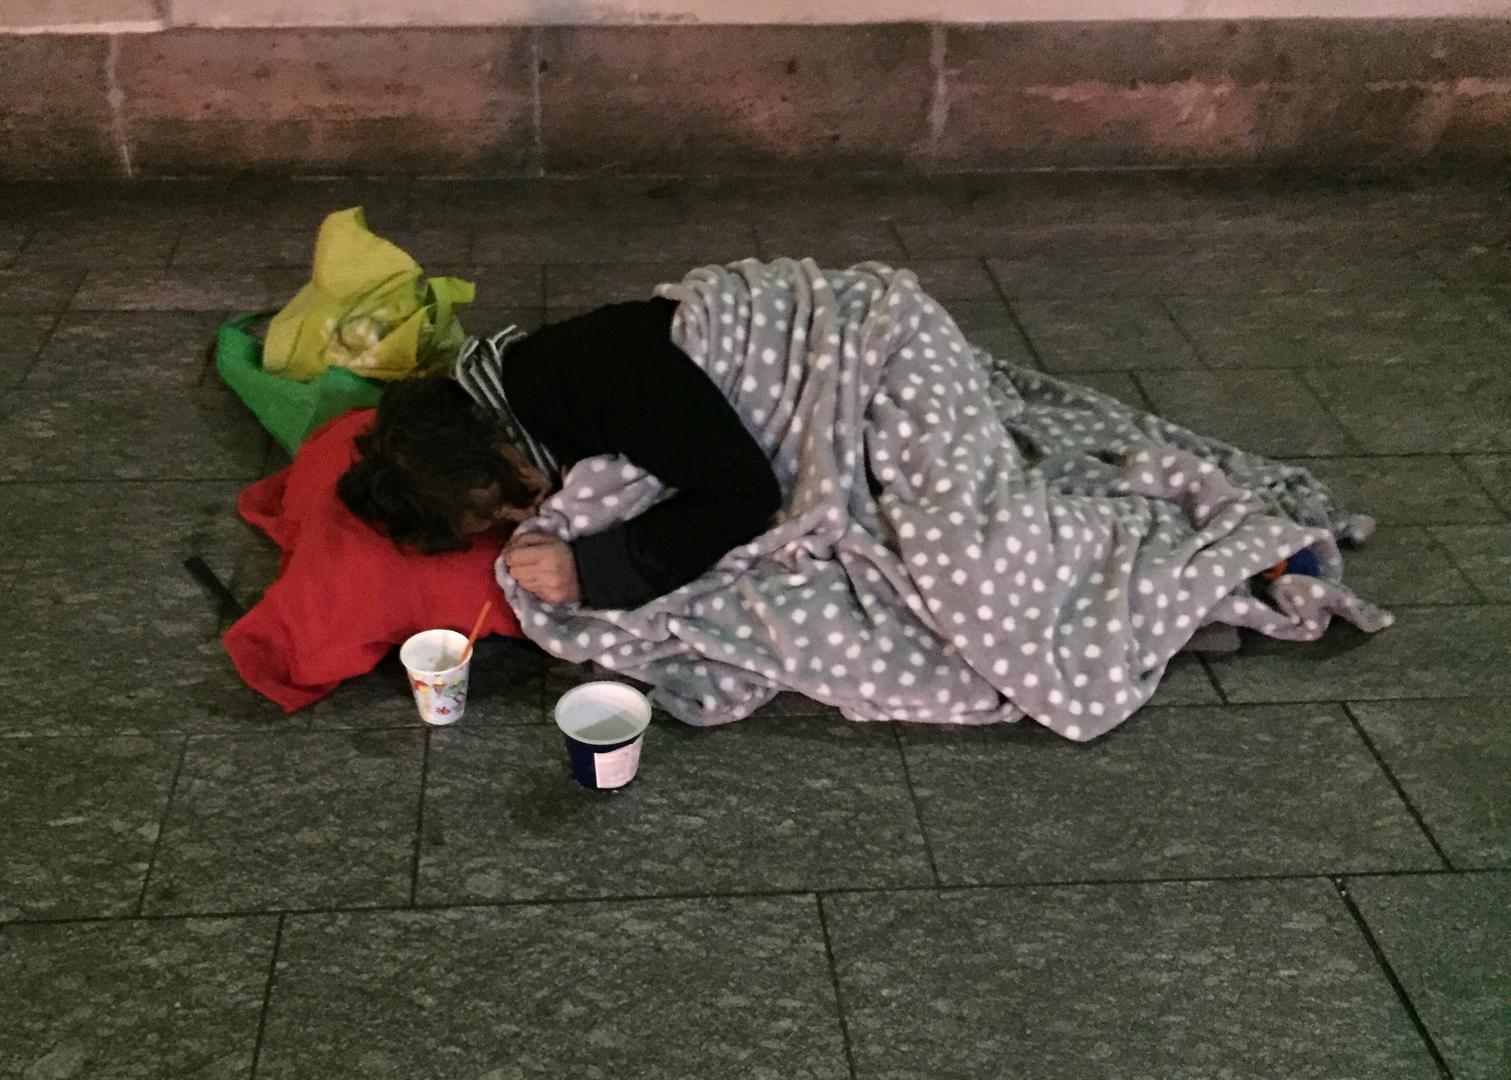 Aboridžin beskućnik spava u središtu Brisbanea